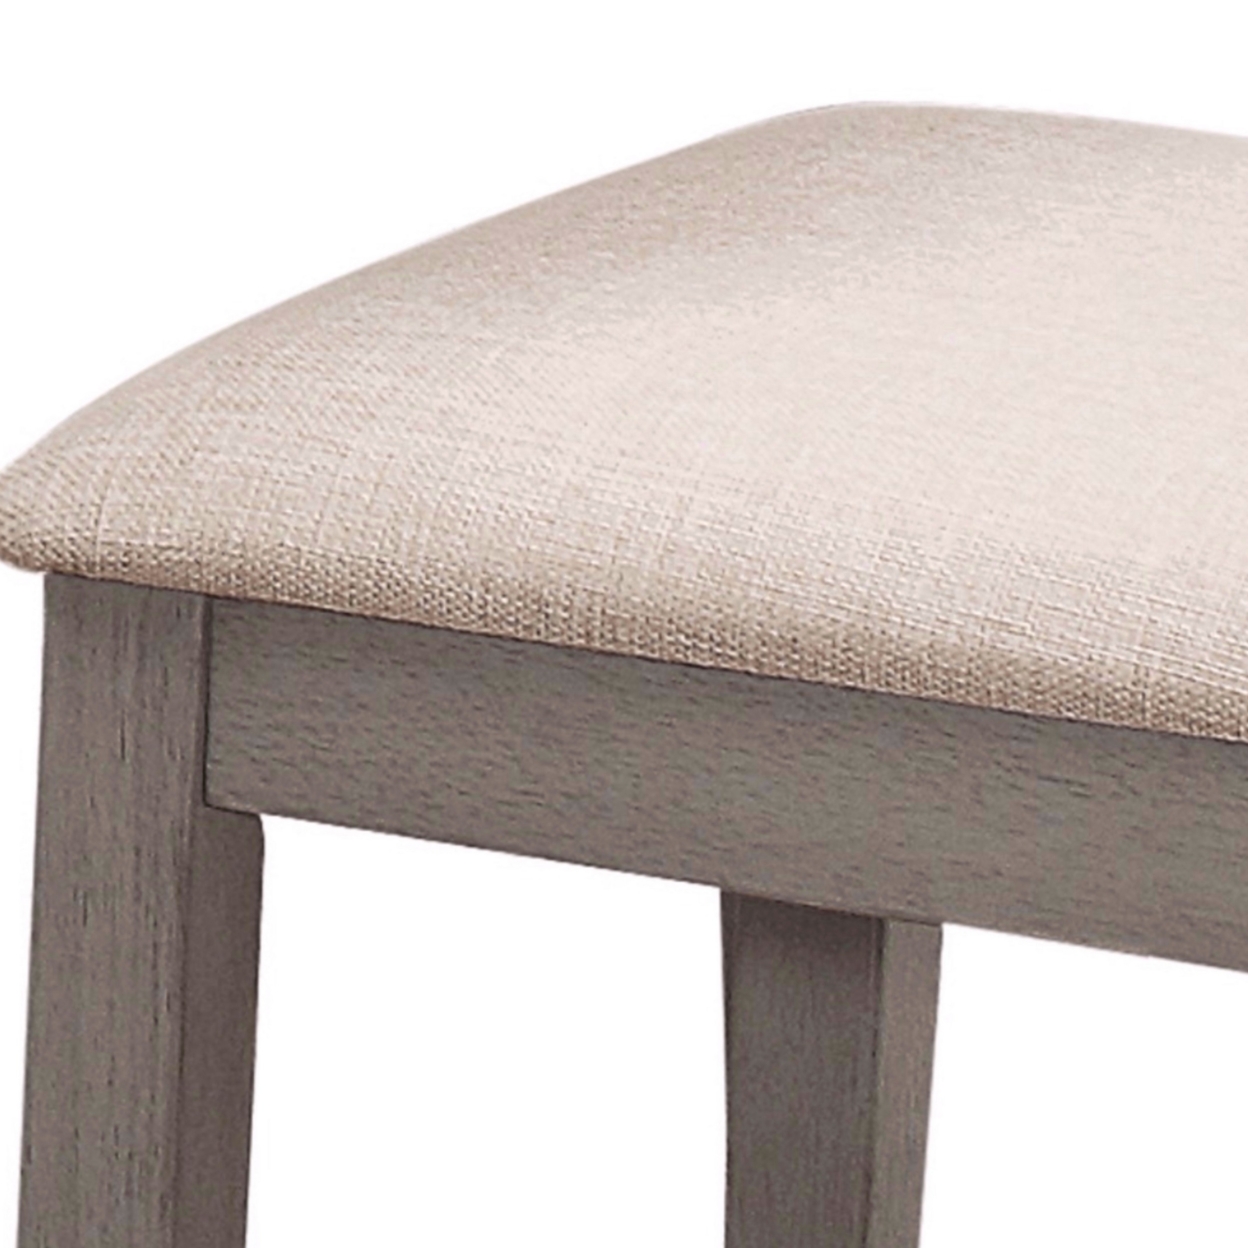 Wooden Side Chair With Slatted Design Backrest, Set Of 2, Gray- Saltoro Sherpi